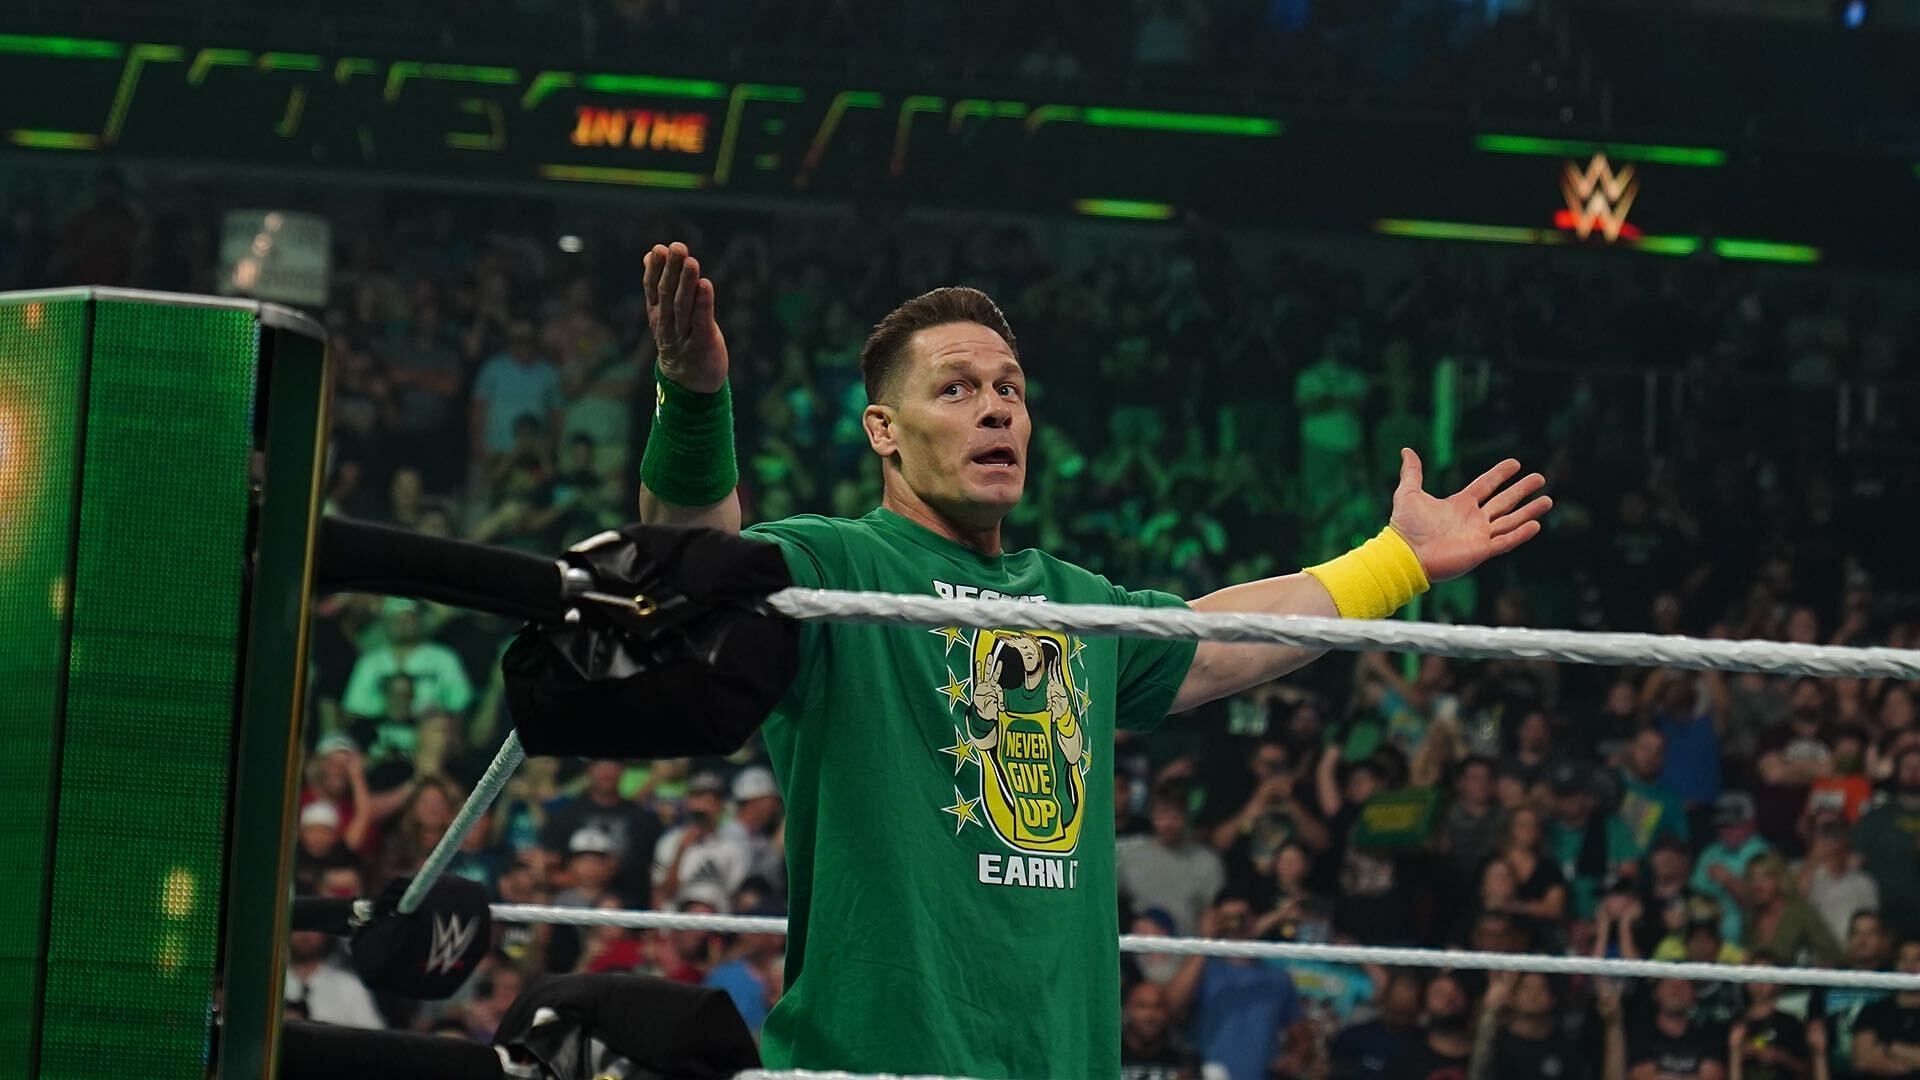 Jone Cena Xxx - John Cena WWE | News, Rumors, Photos & More